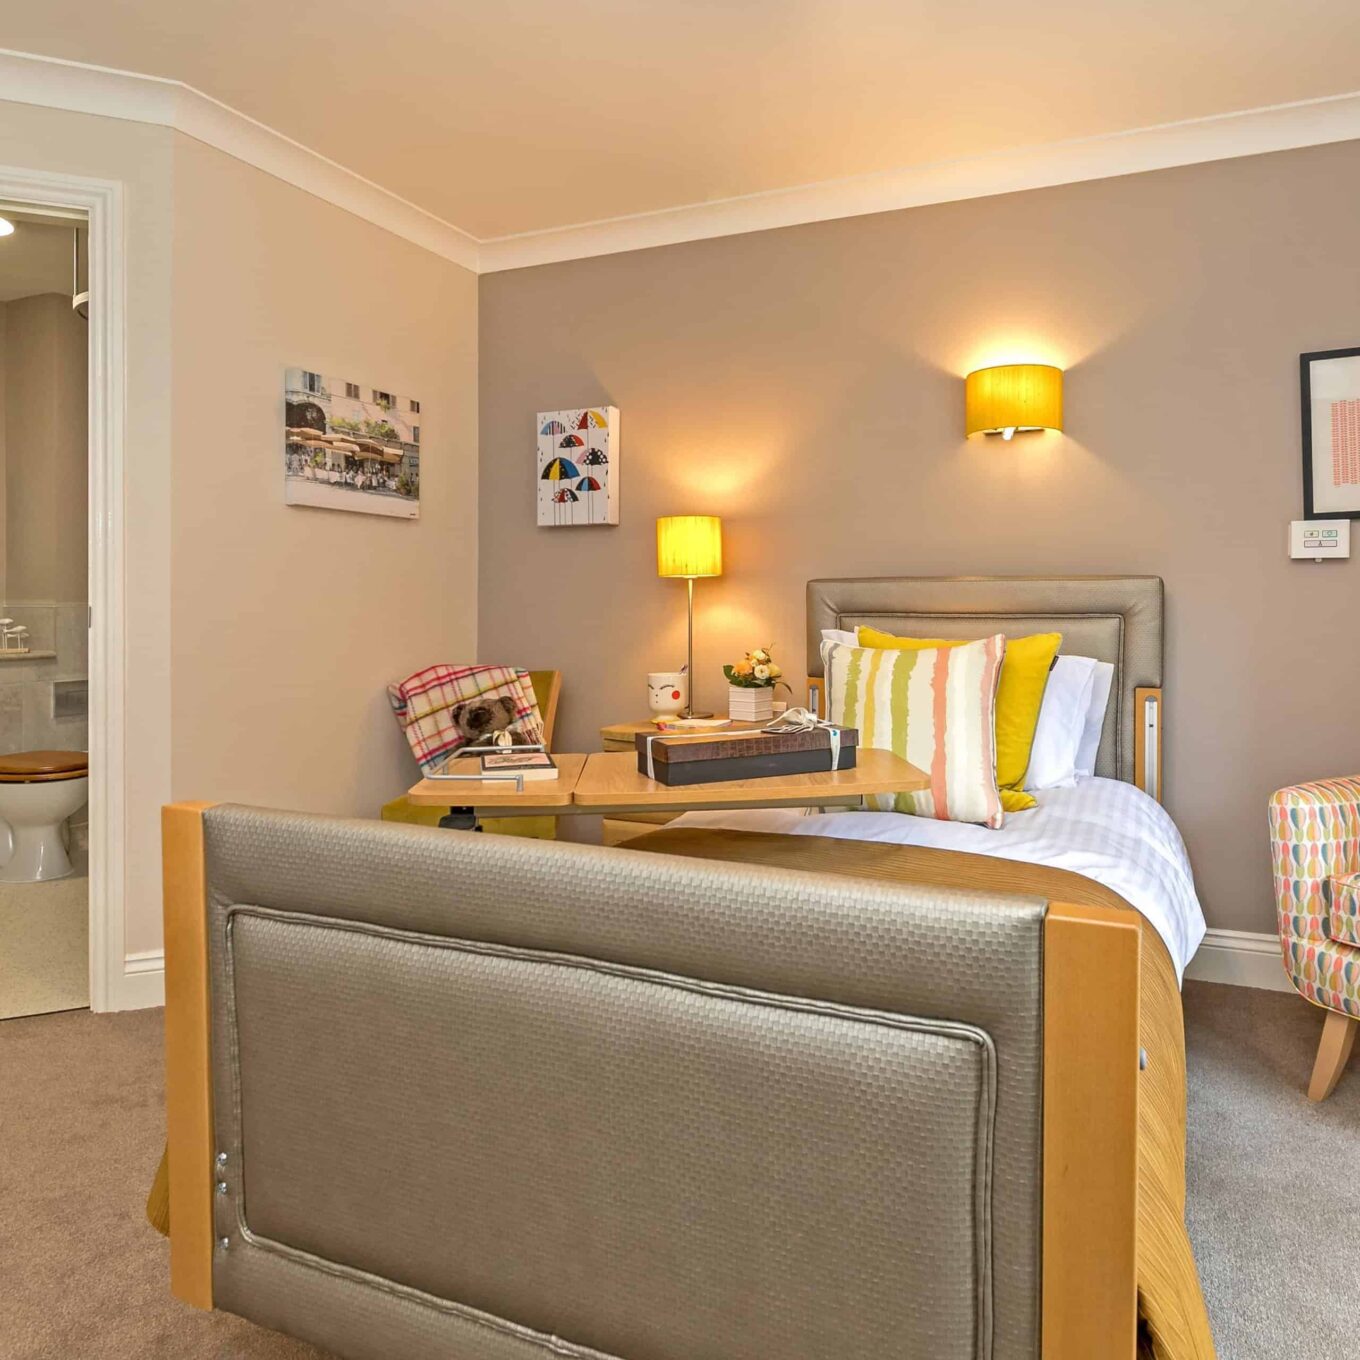 Bedroom with en suite bathroom at Beechwood Grove Care Home in Eastbourne